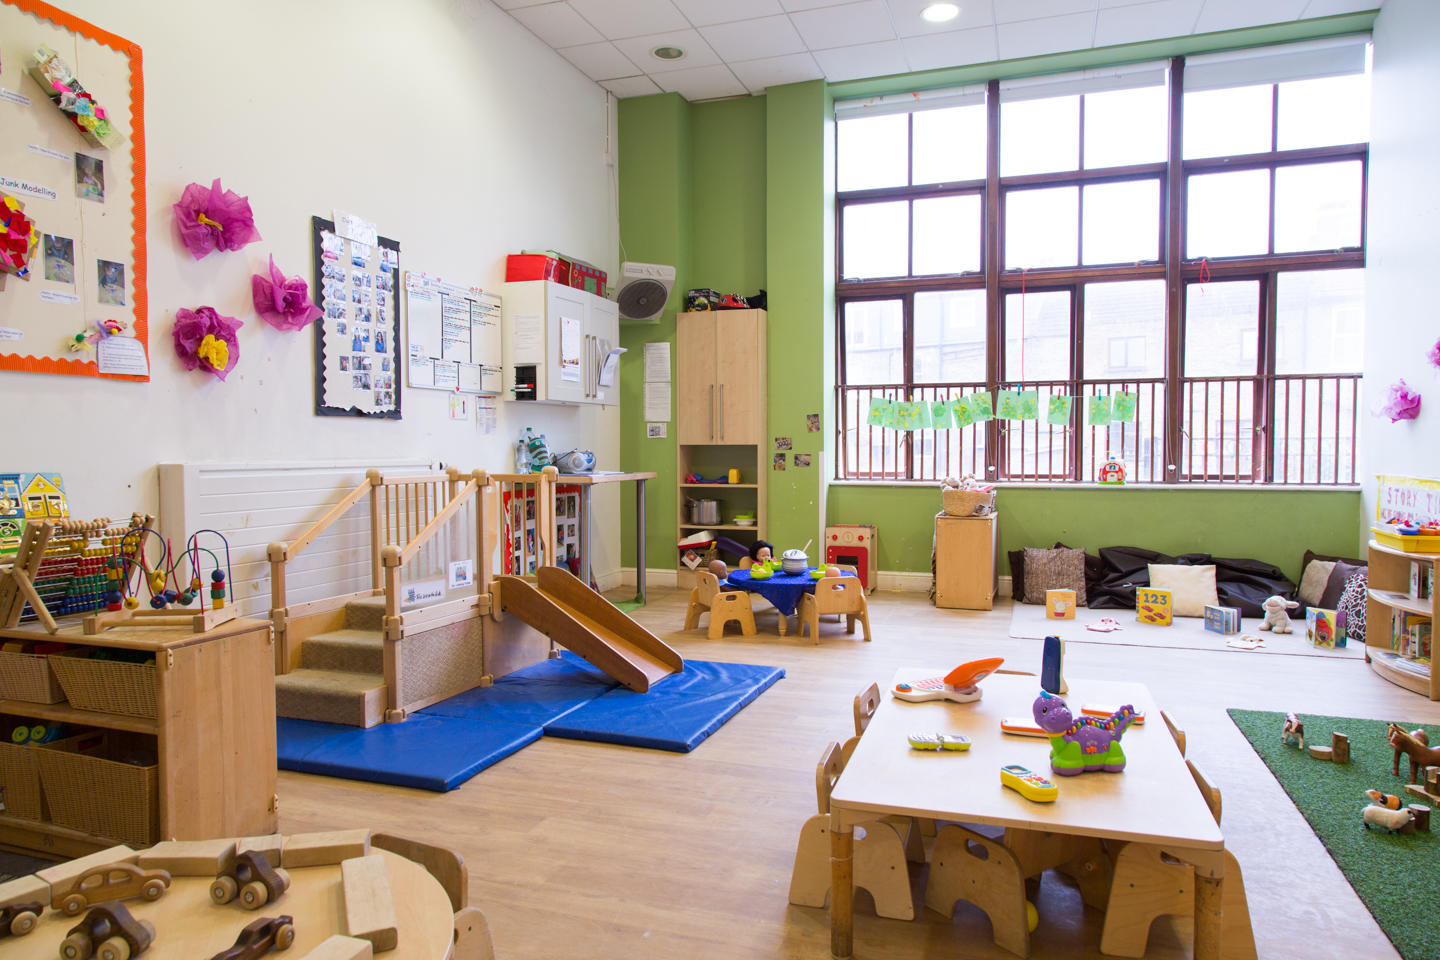 Bright Horizons Southfields Day Nursery and Preschool London 03334 553181